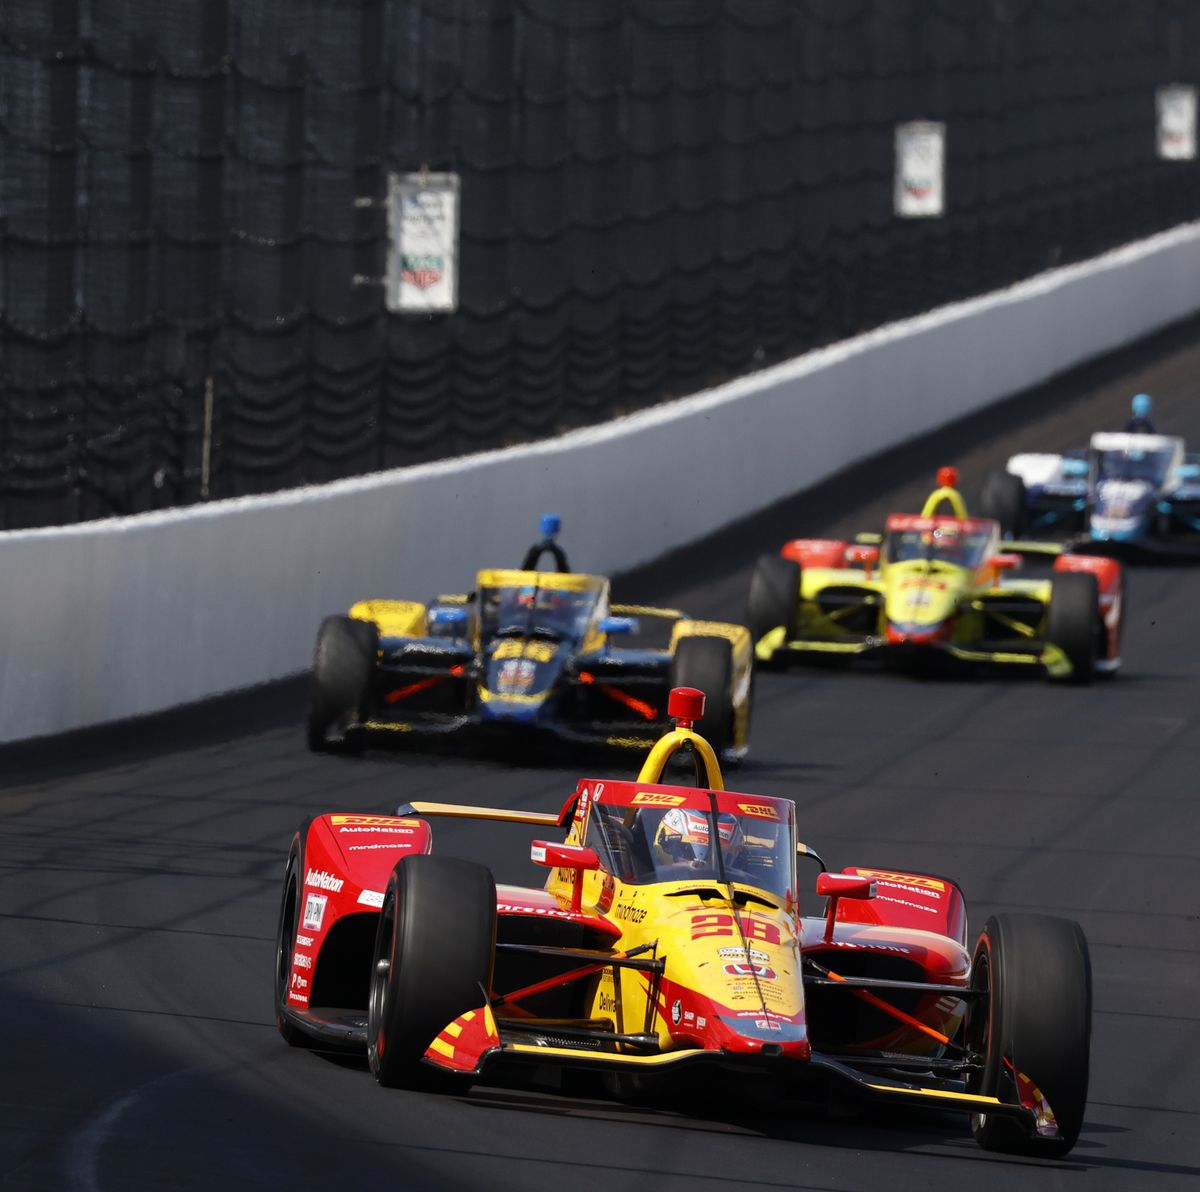 hhgregg bankruptcy costs Andretti Autosport IndyCar team major